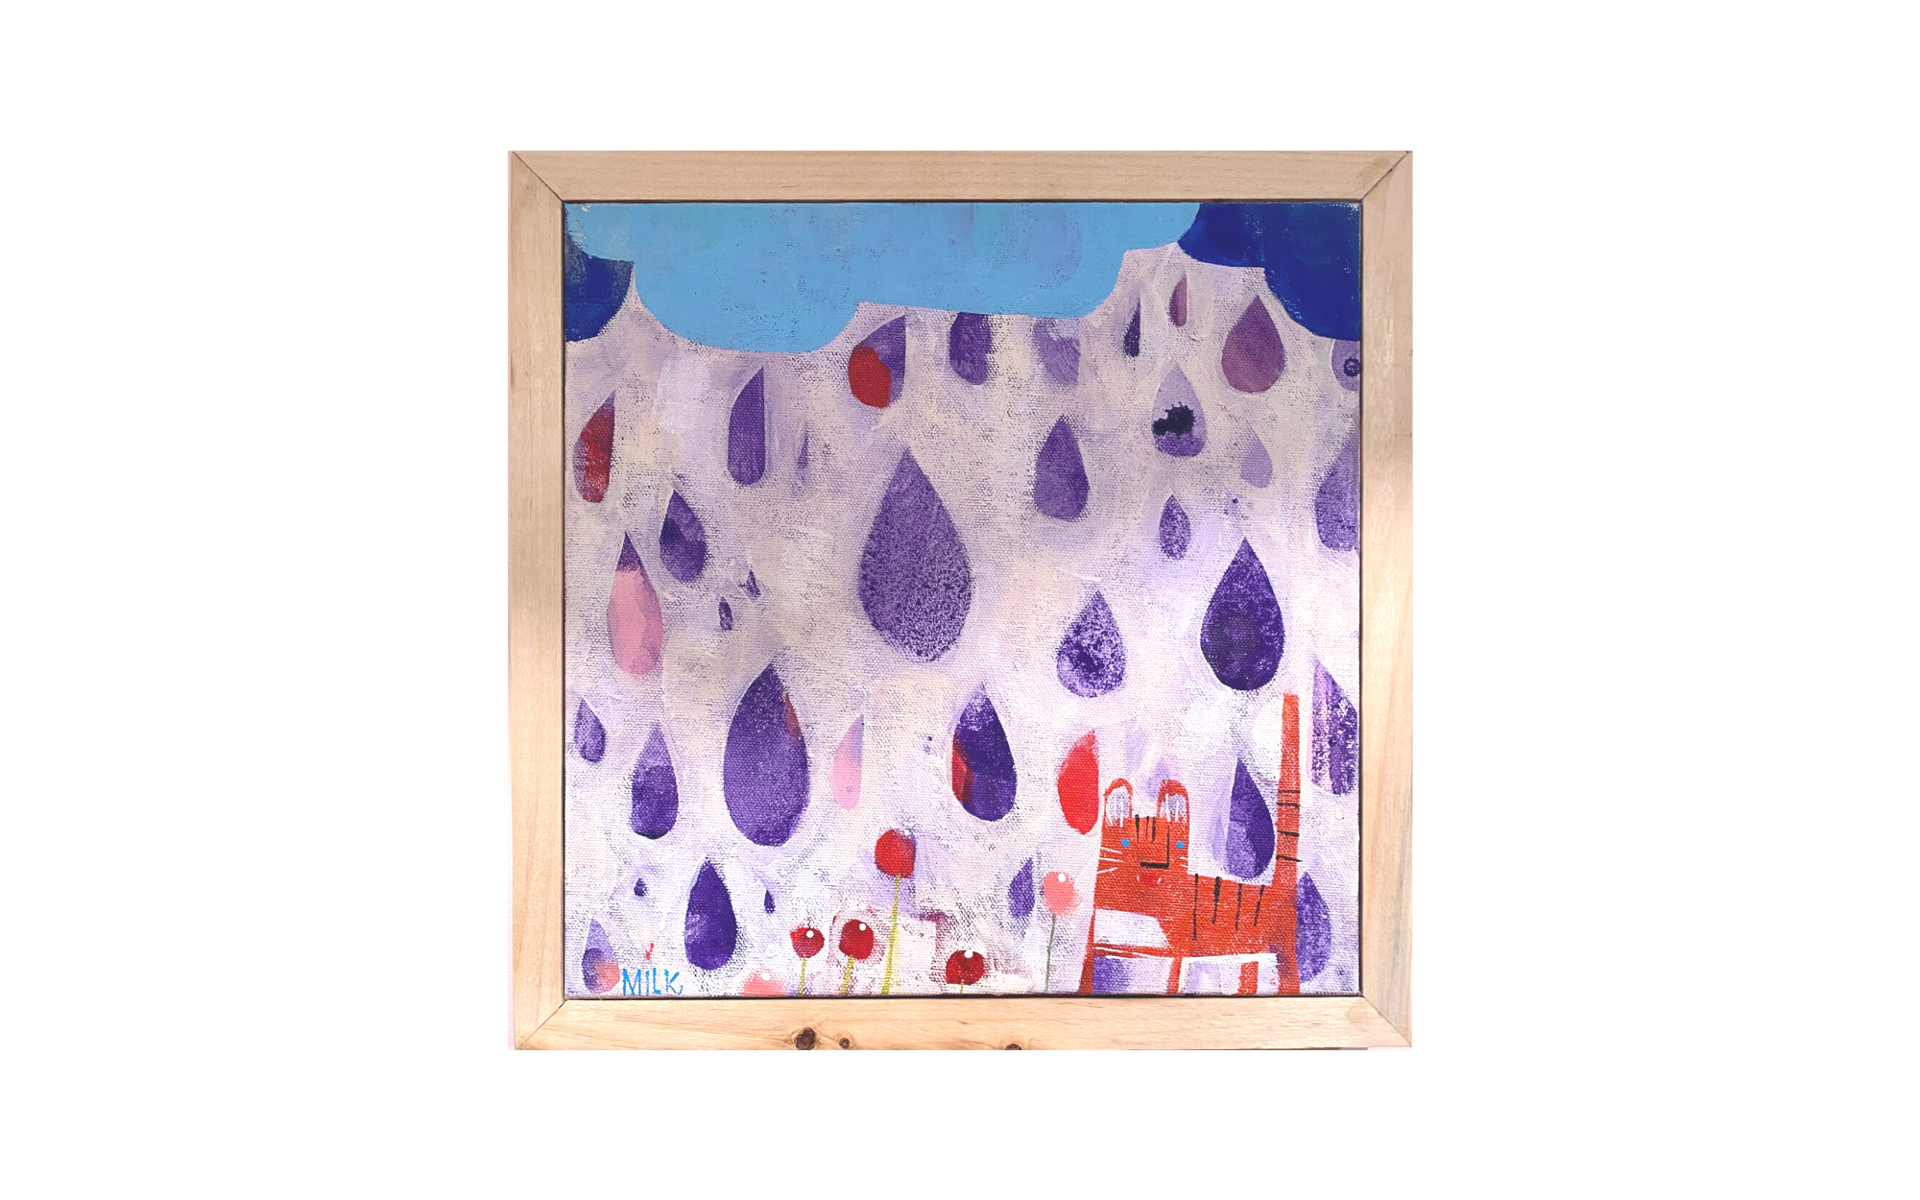 Purple Rain by CHRIS MILK HULBURT